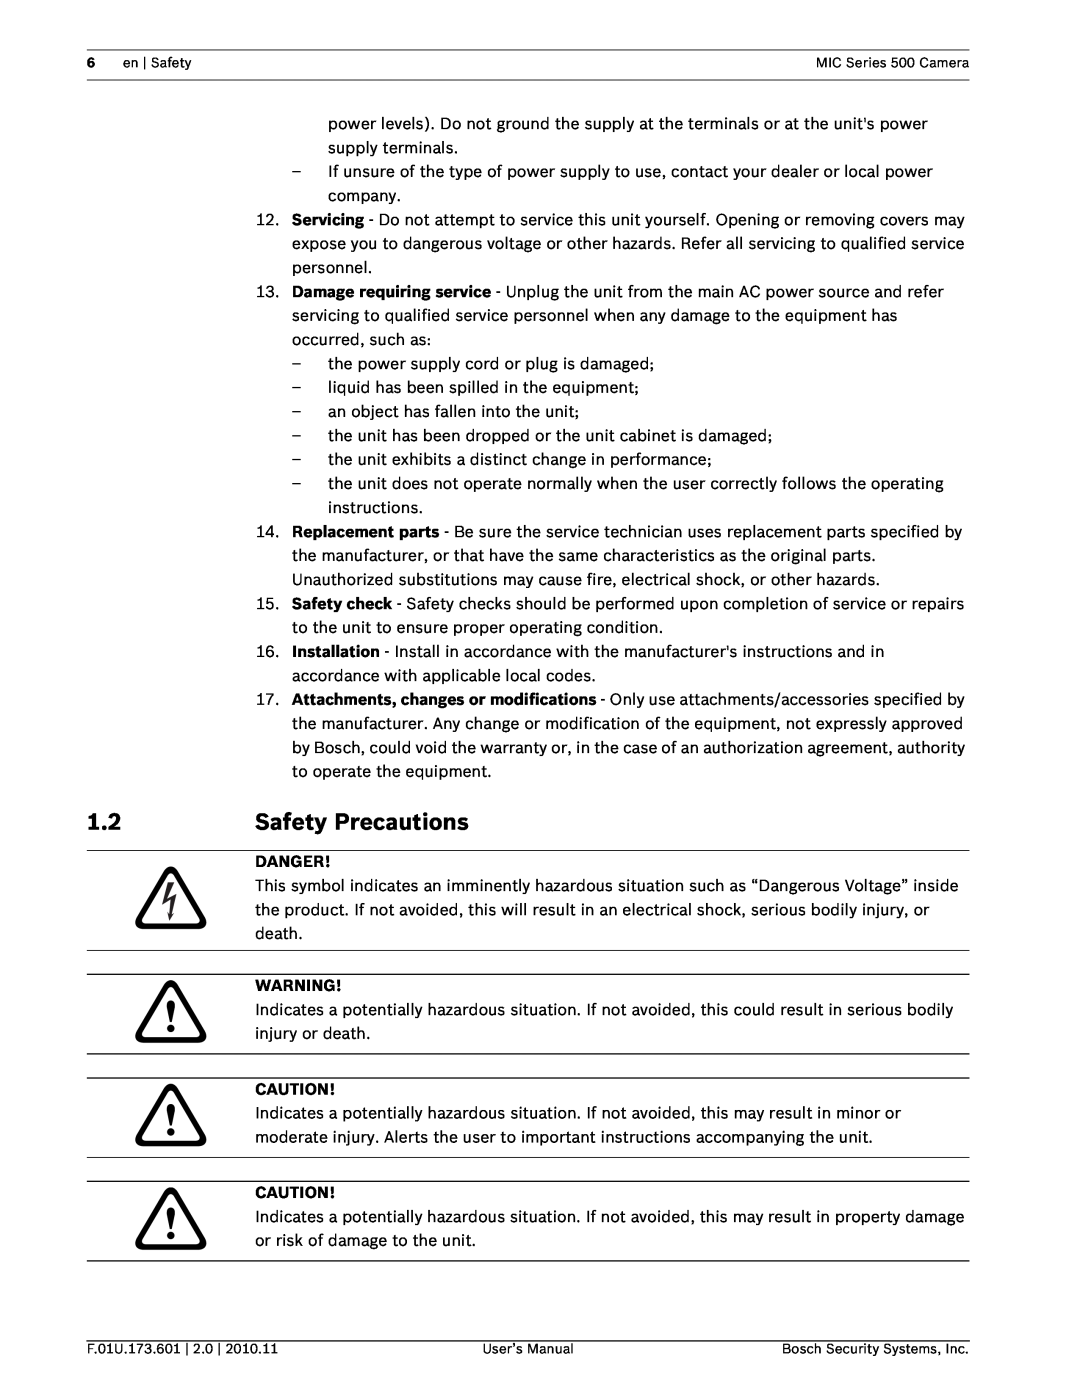 Bosch Appliances 500 user manual Safety Precautions, Danger 